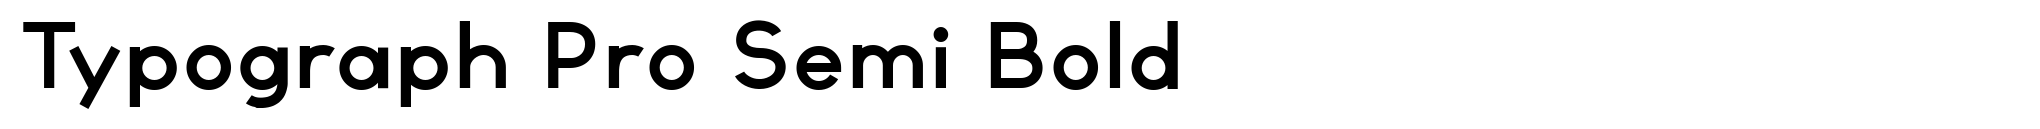 Typograph Pro Semi Bold image